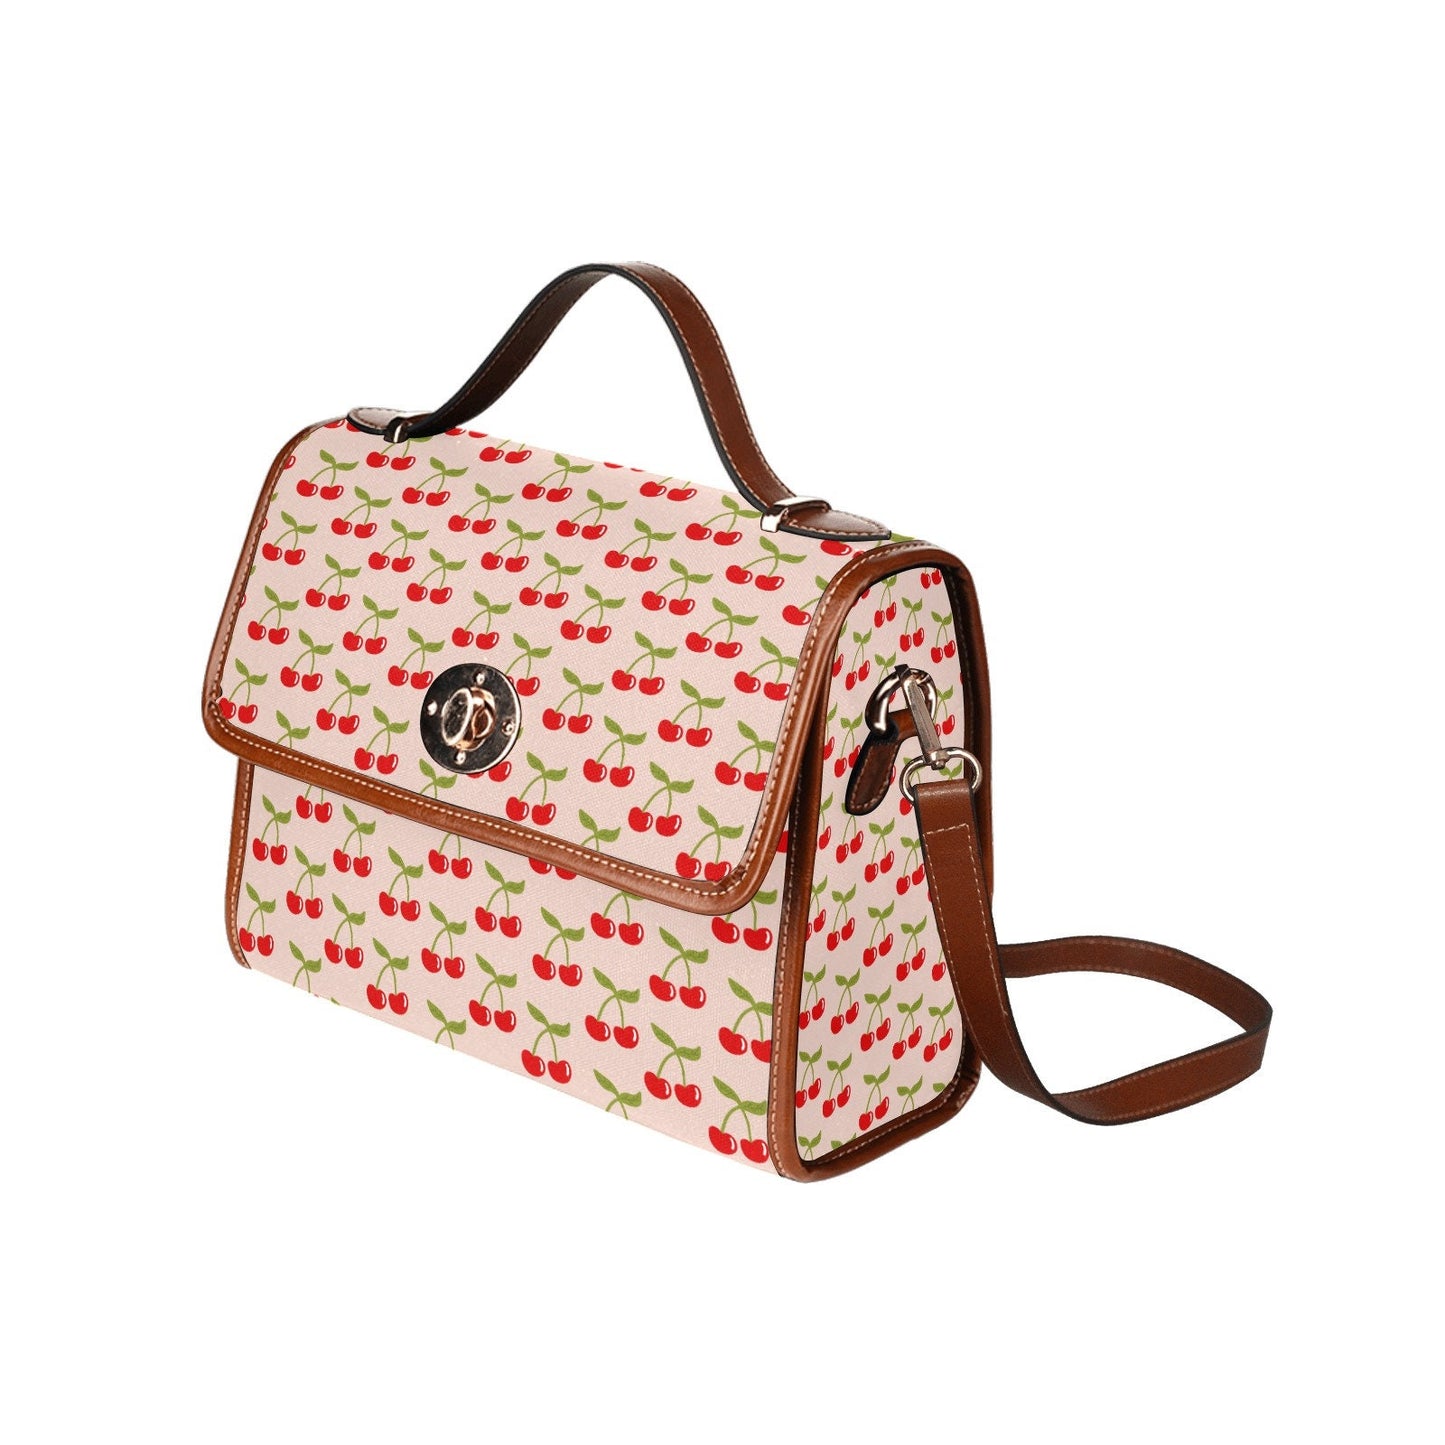 Cherry Handbag, Retro Handbag, Red cherry handbag, Retro Satchel, Cute handbag, Cherry Print Bag, Pink Red handbag, Women's Purses